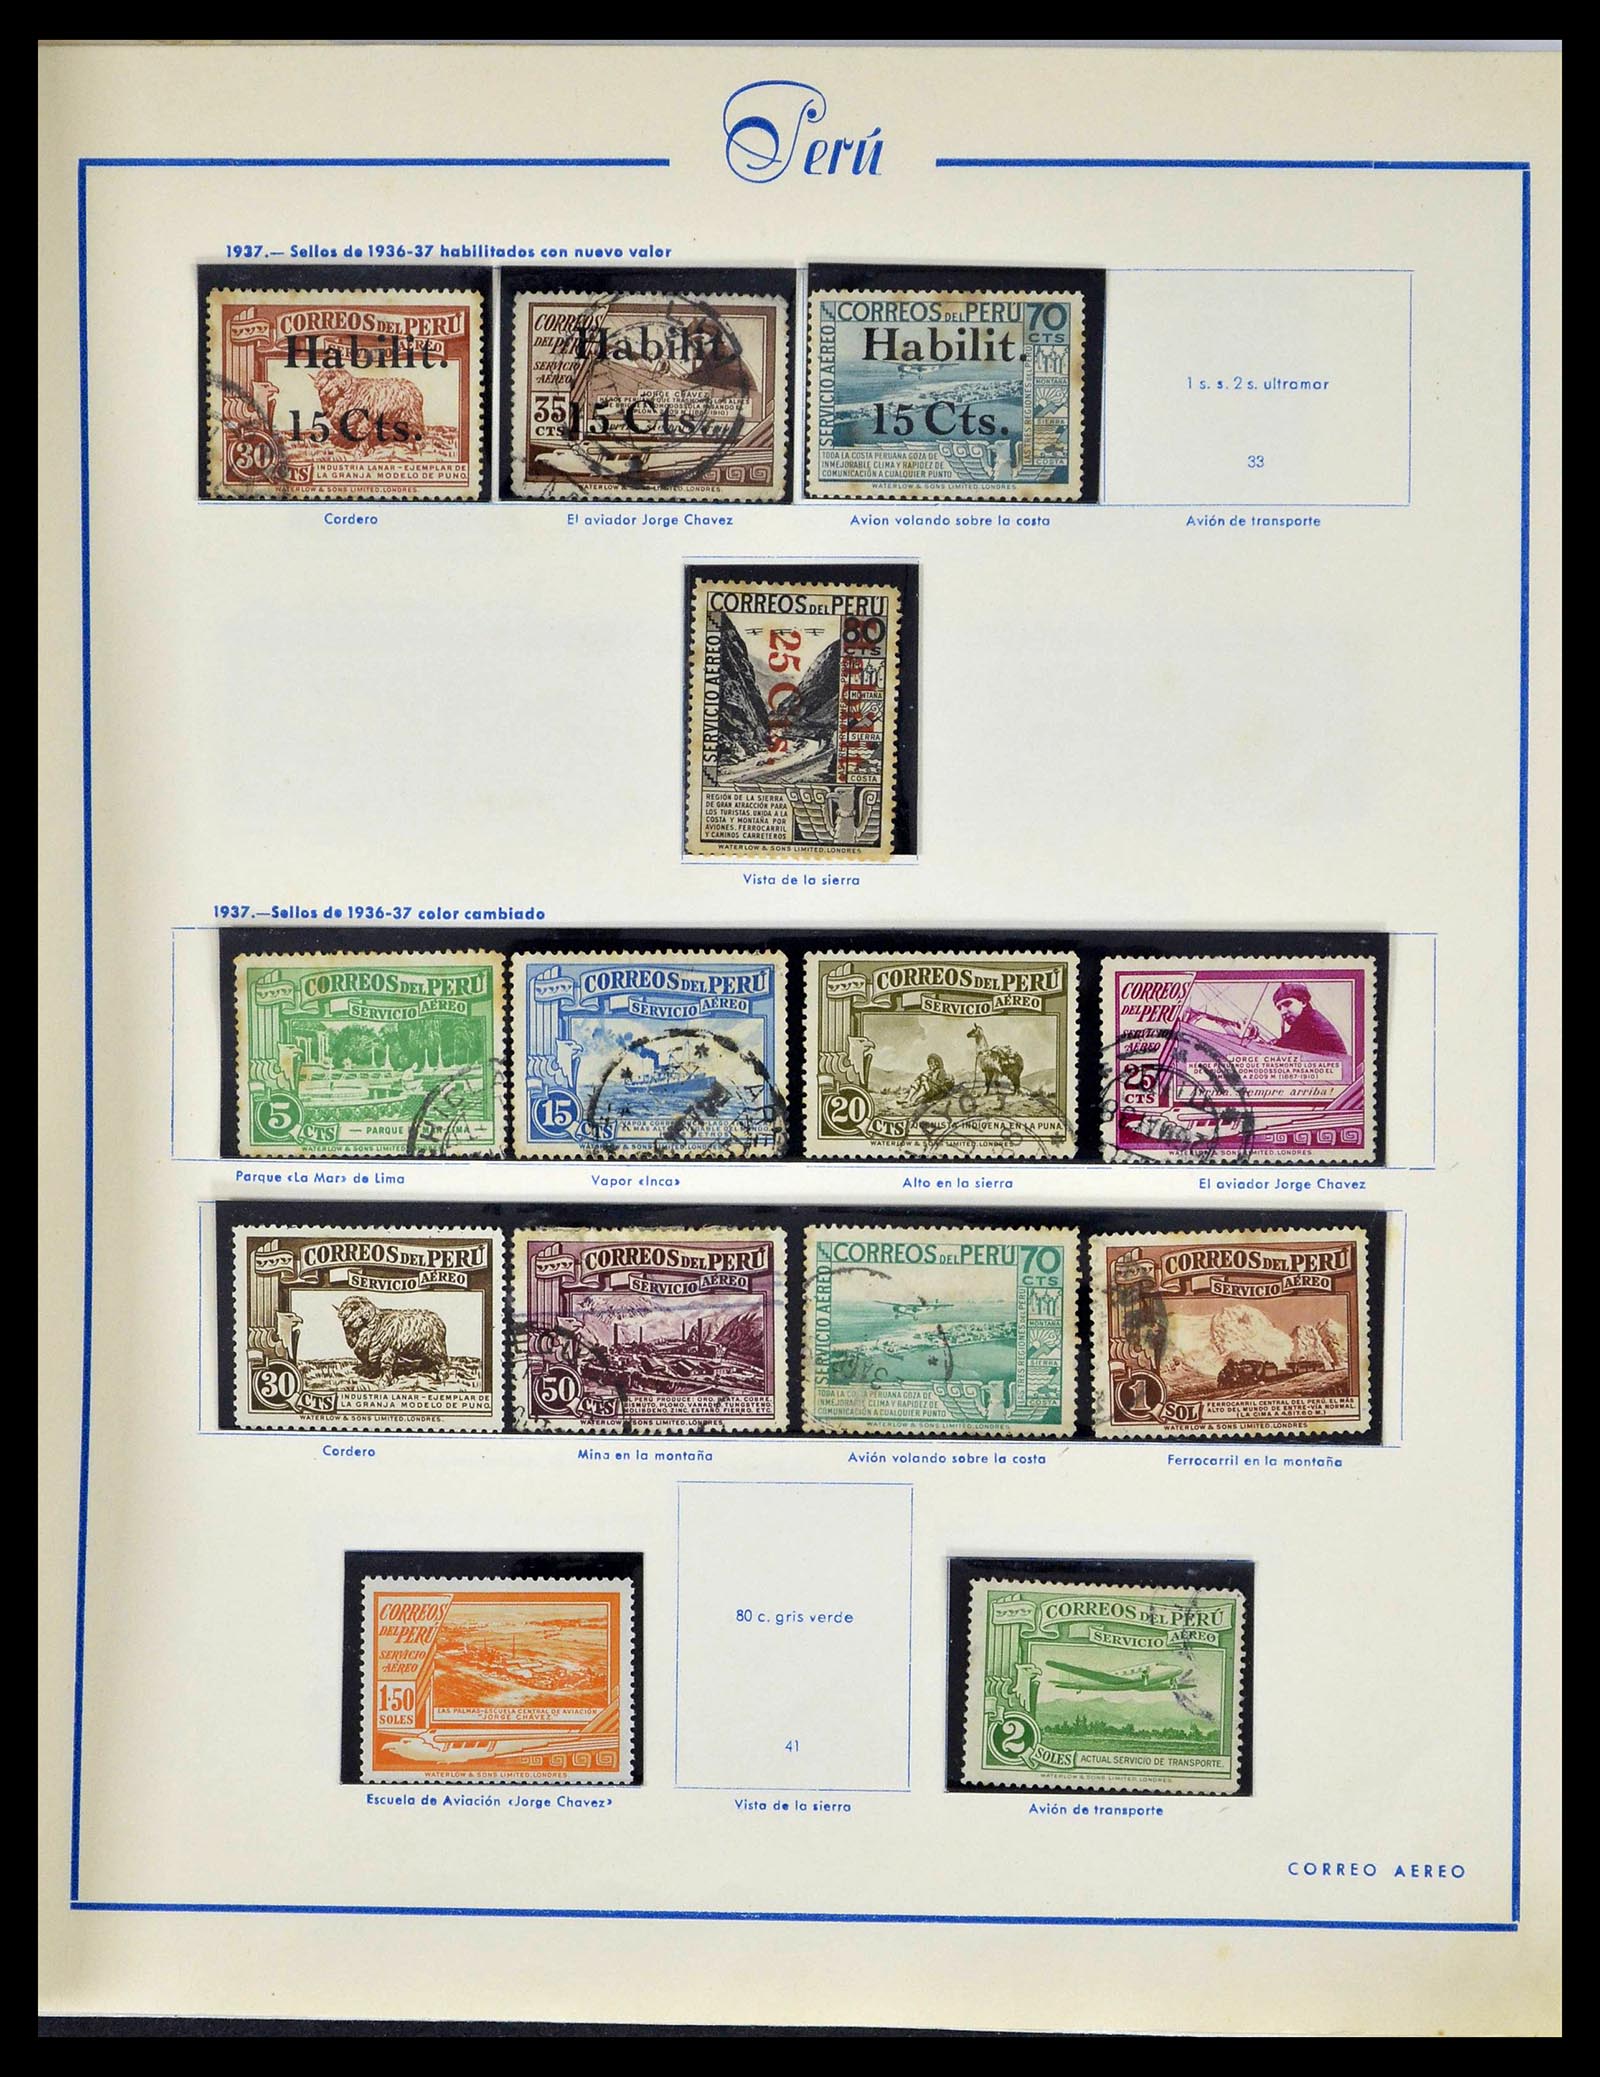 39214 0046 - Stamp collection 39214 Peru 1857-1981.